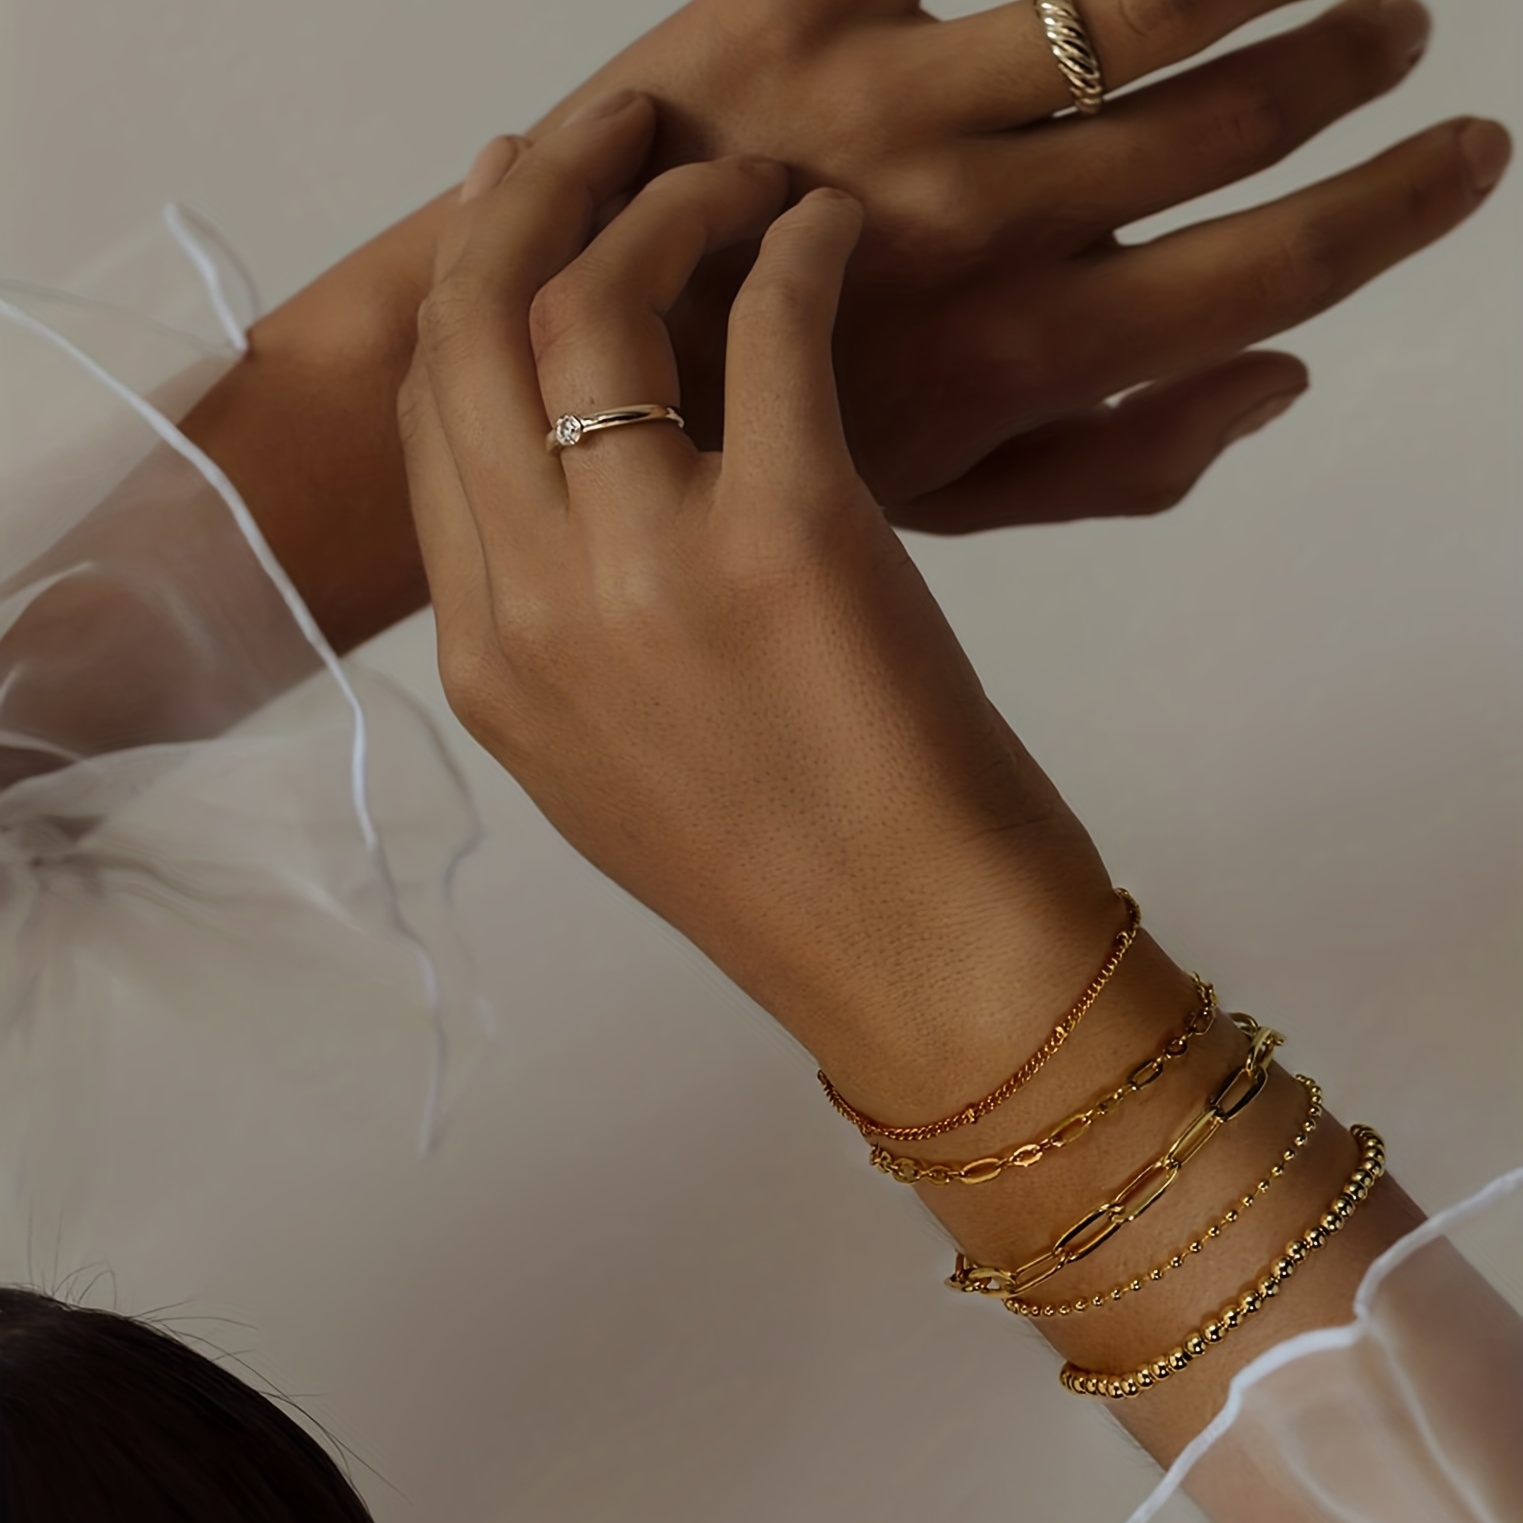 VIMCUPQ Dainty Gold Bracelets for Women & Girls, Adjustable Stackable Gold Chain Bracelet Set, 18K/14K Gold Plated Women Trendy Jewelry Layered Link